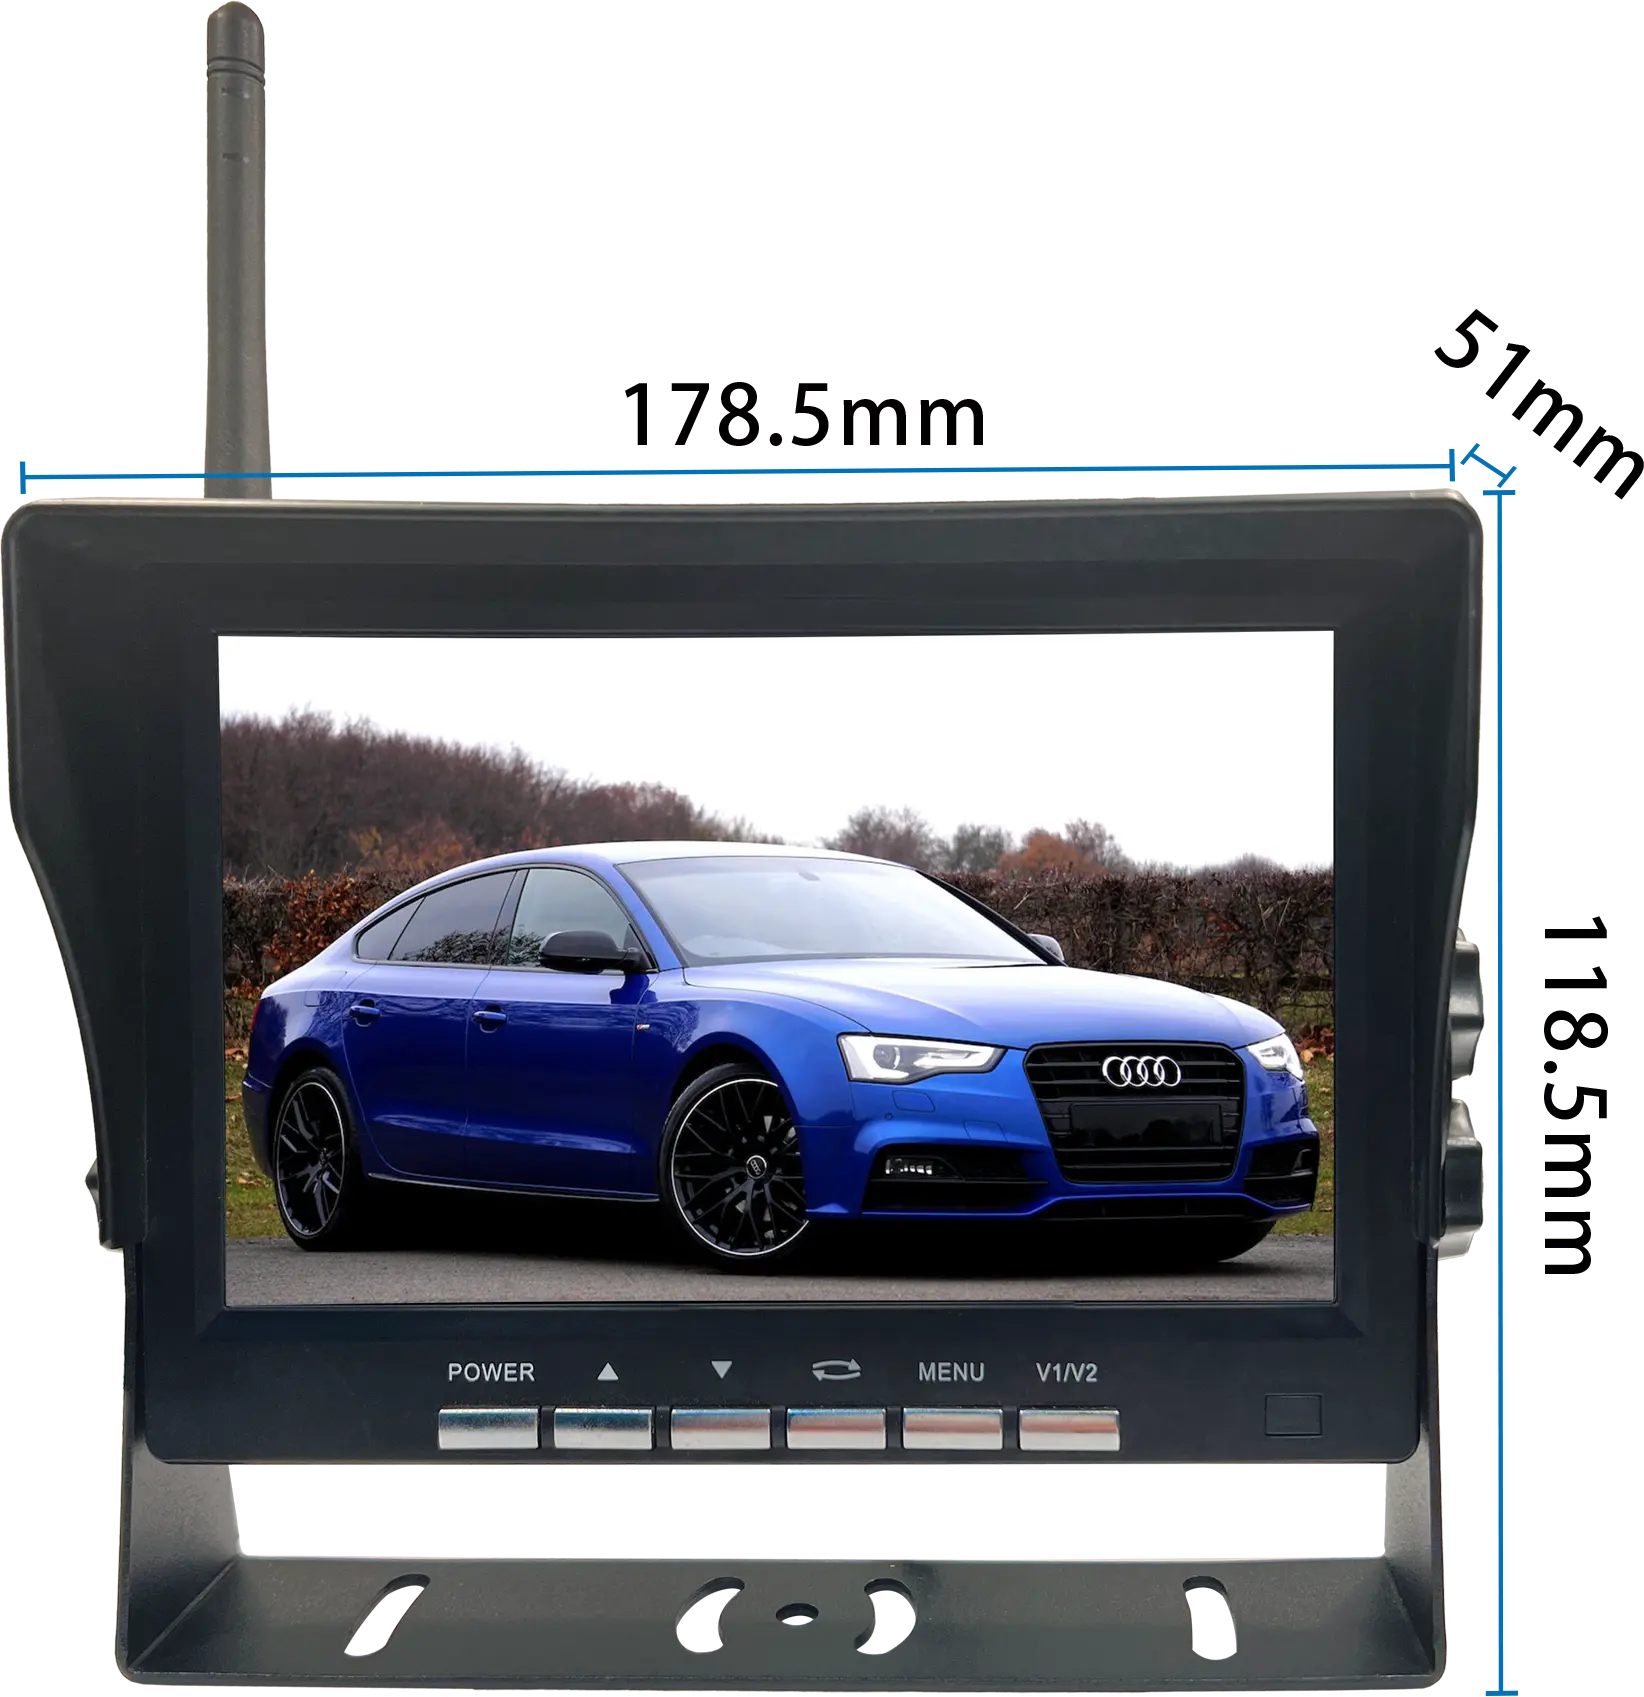 7 zoll quad hd ips bildschirm drahtloses dashcamerasystem rückwärtshilfe-monitor für fahrzeug bus fahrzeug lkw